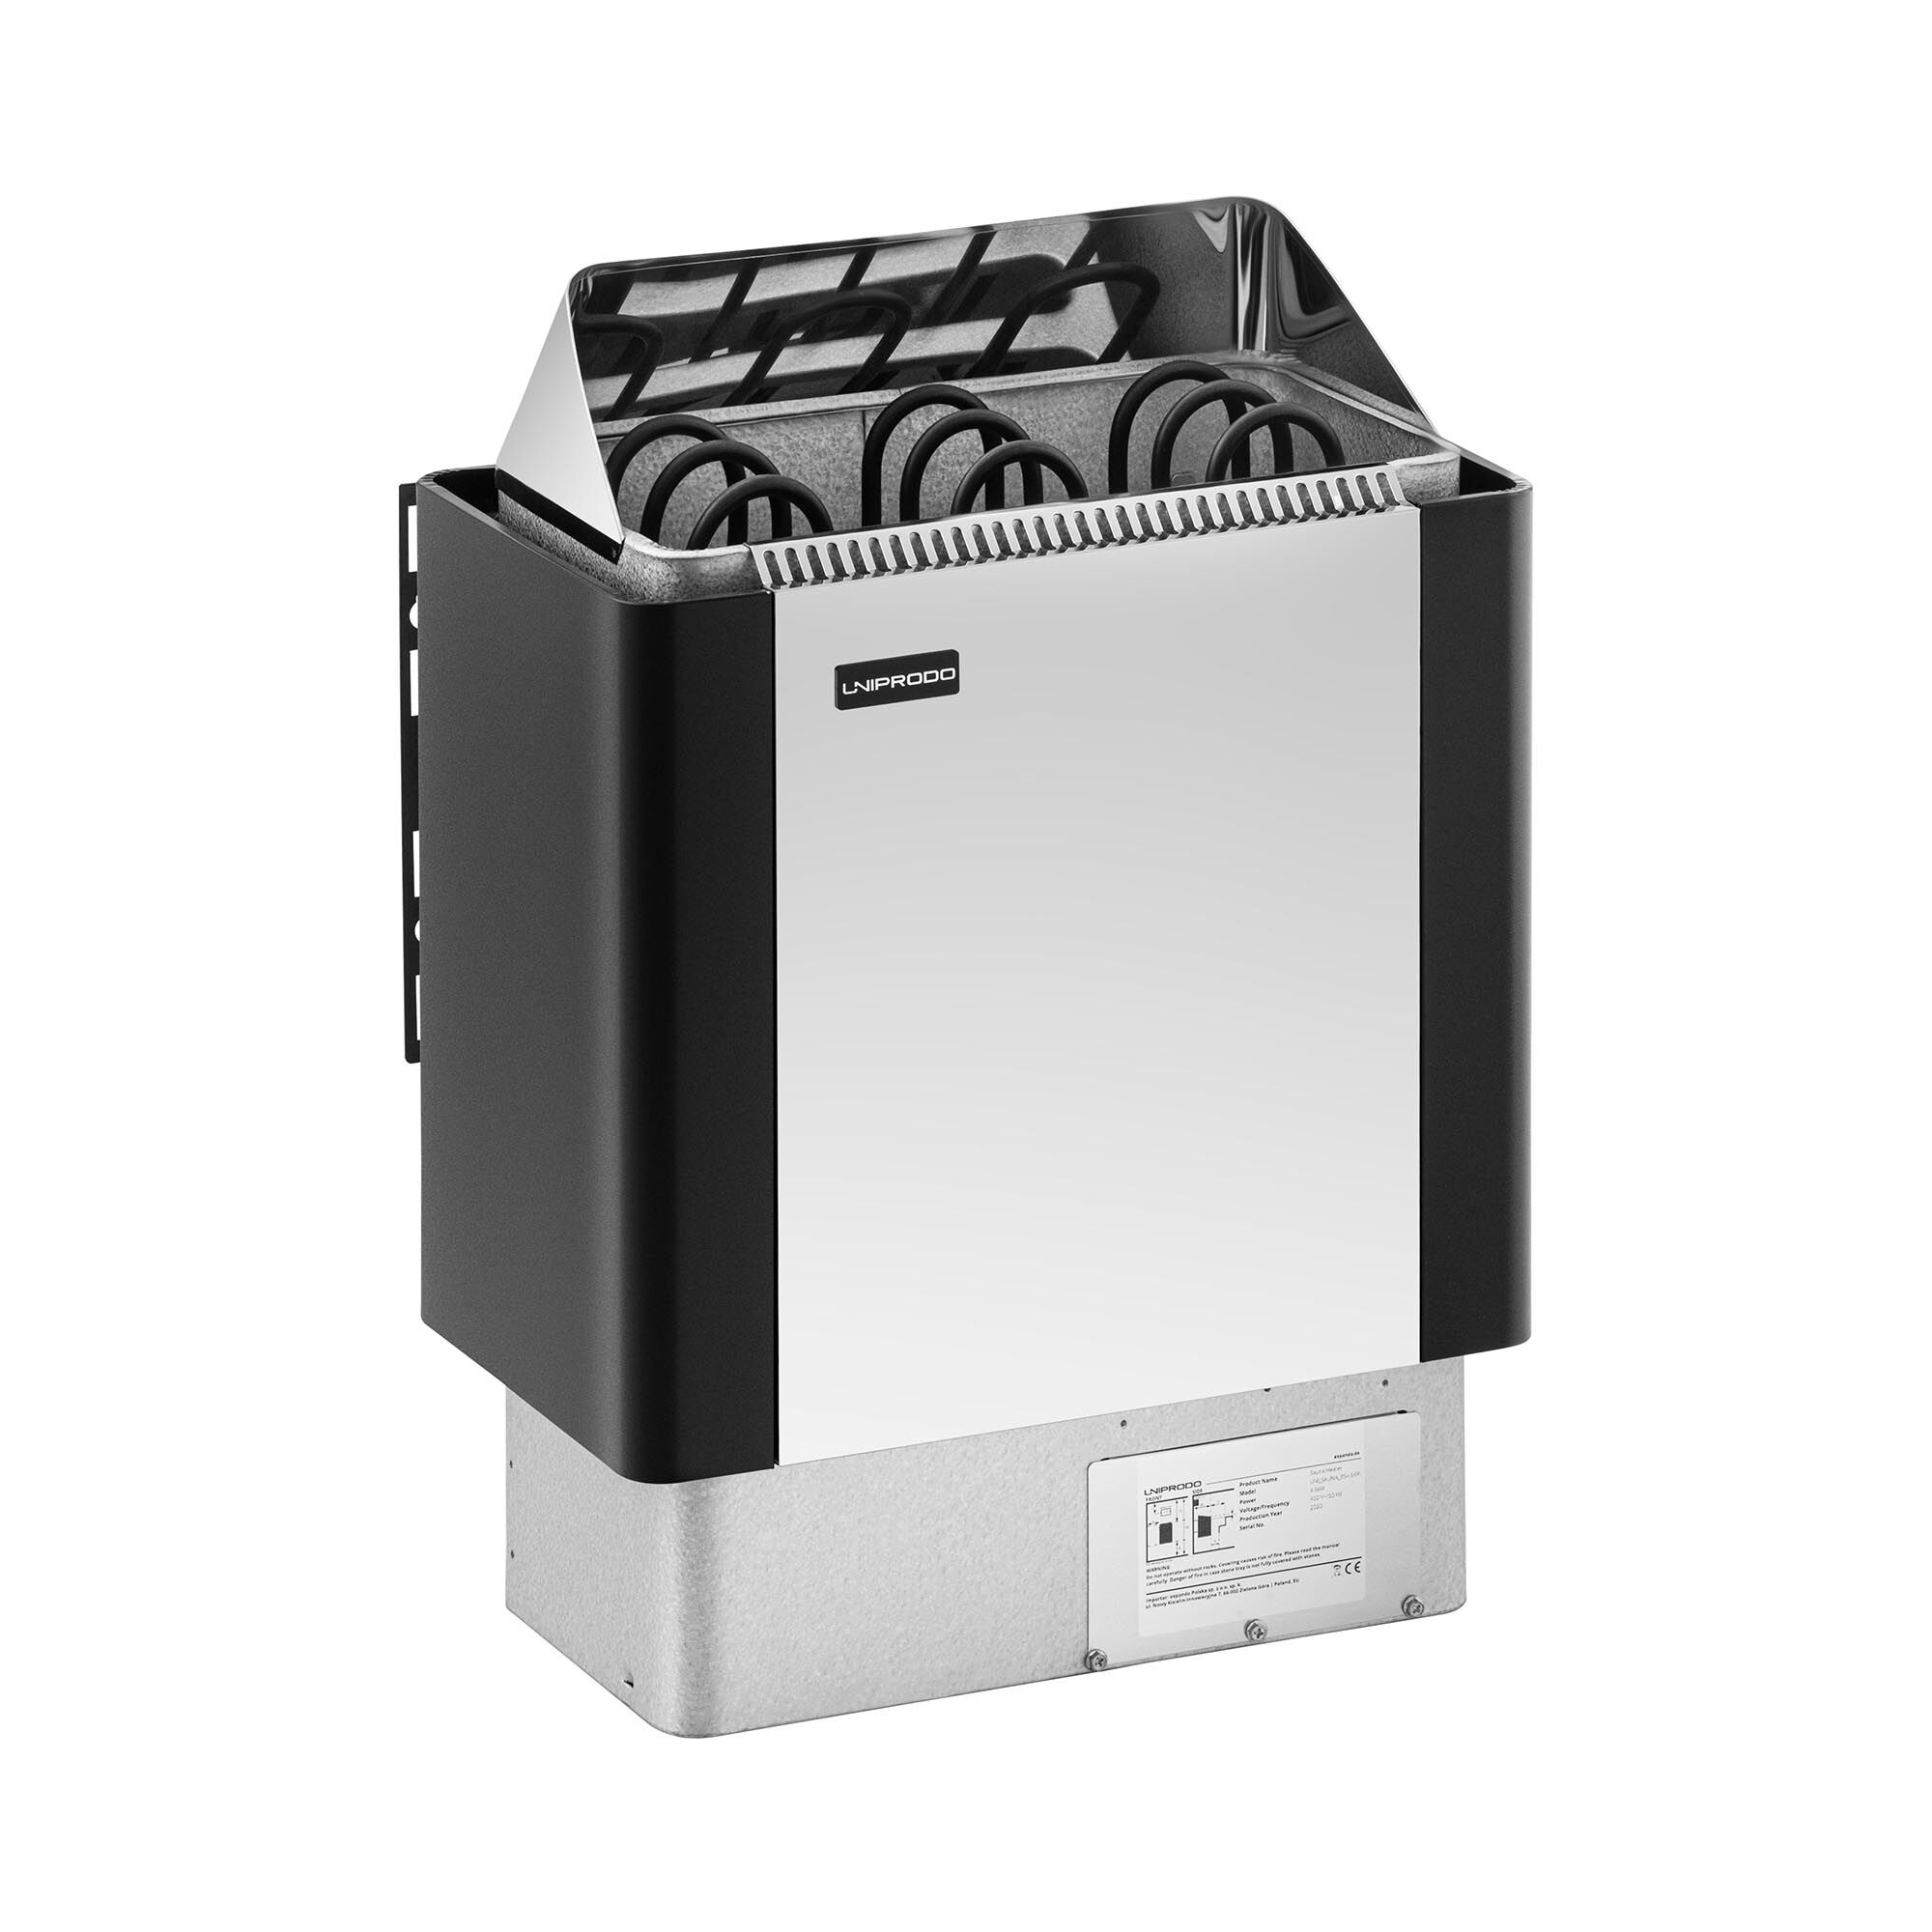 Uniprodo Sauna Heater - 4.5 kW - 30 to 110 °C - stainless steel baffle plate UNI_SAUNA_BS4.5KW